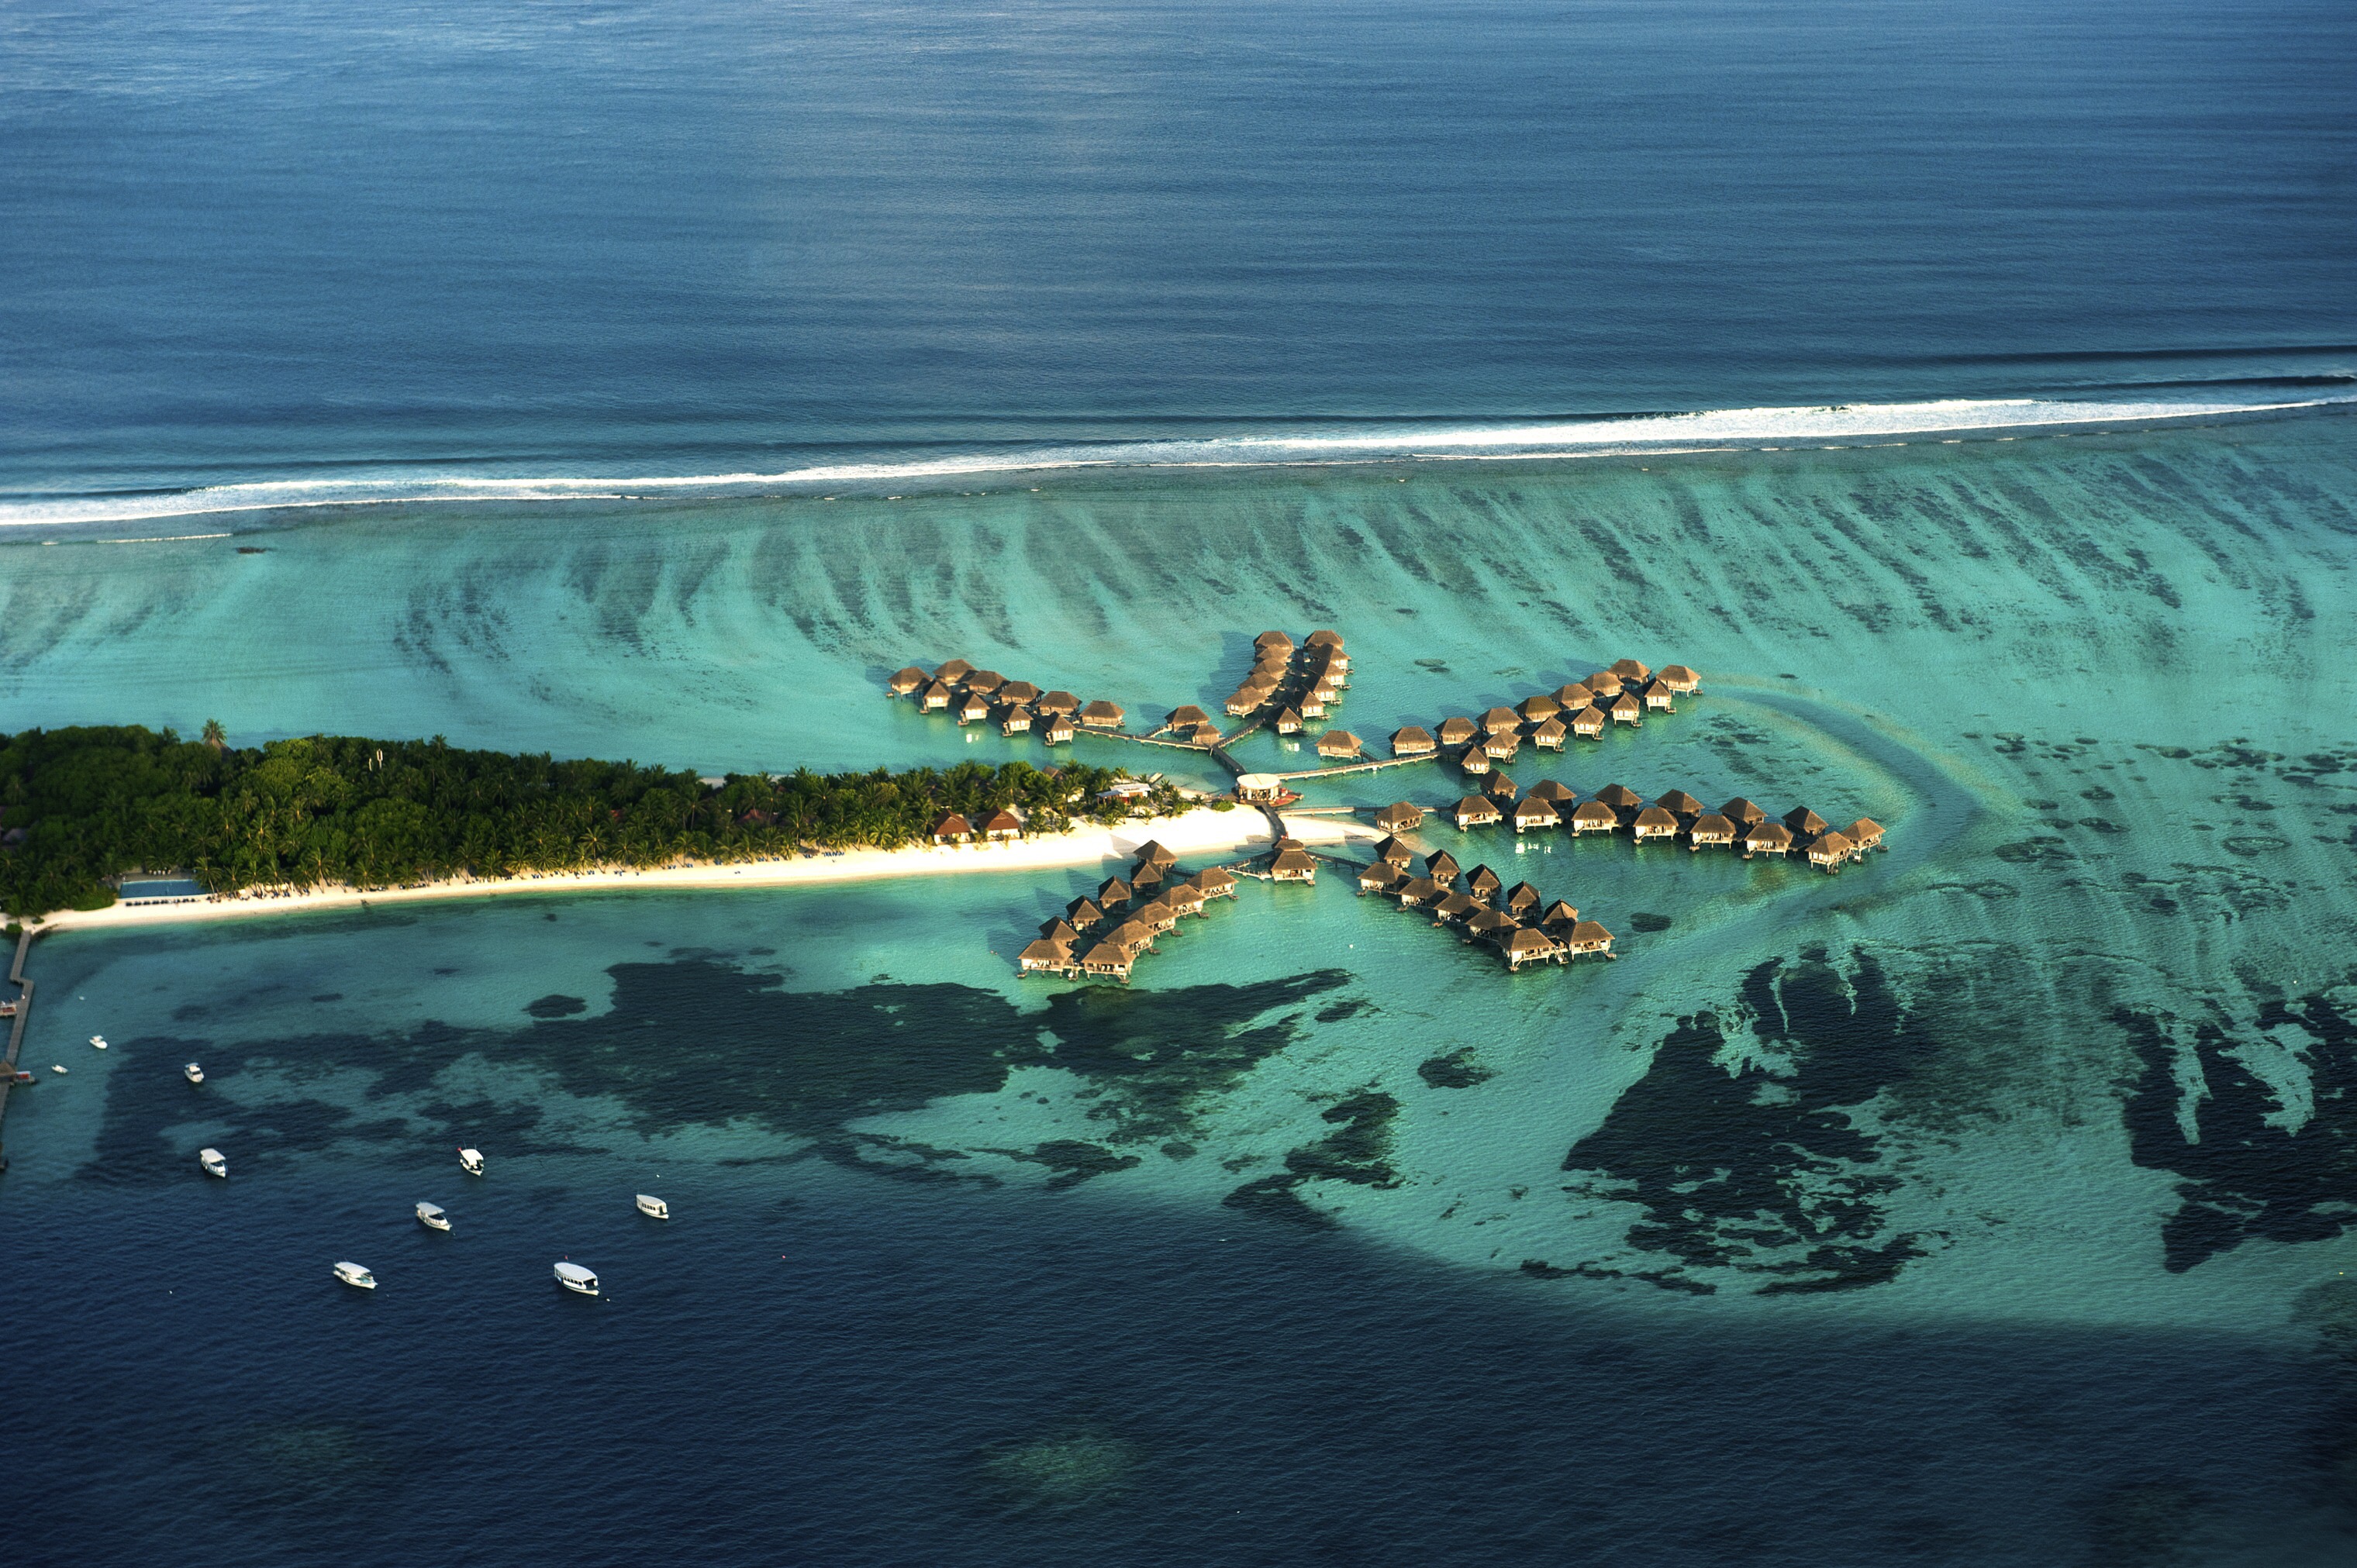 maldives must visit